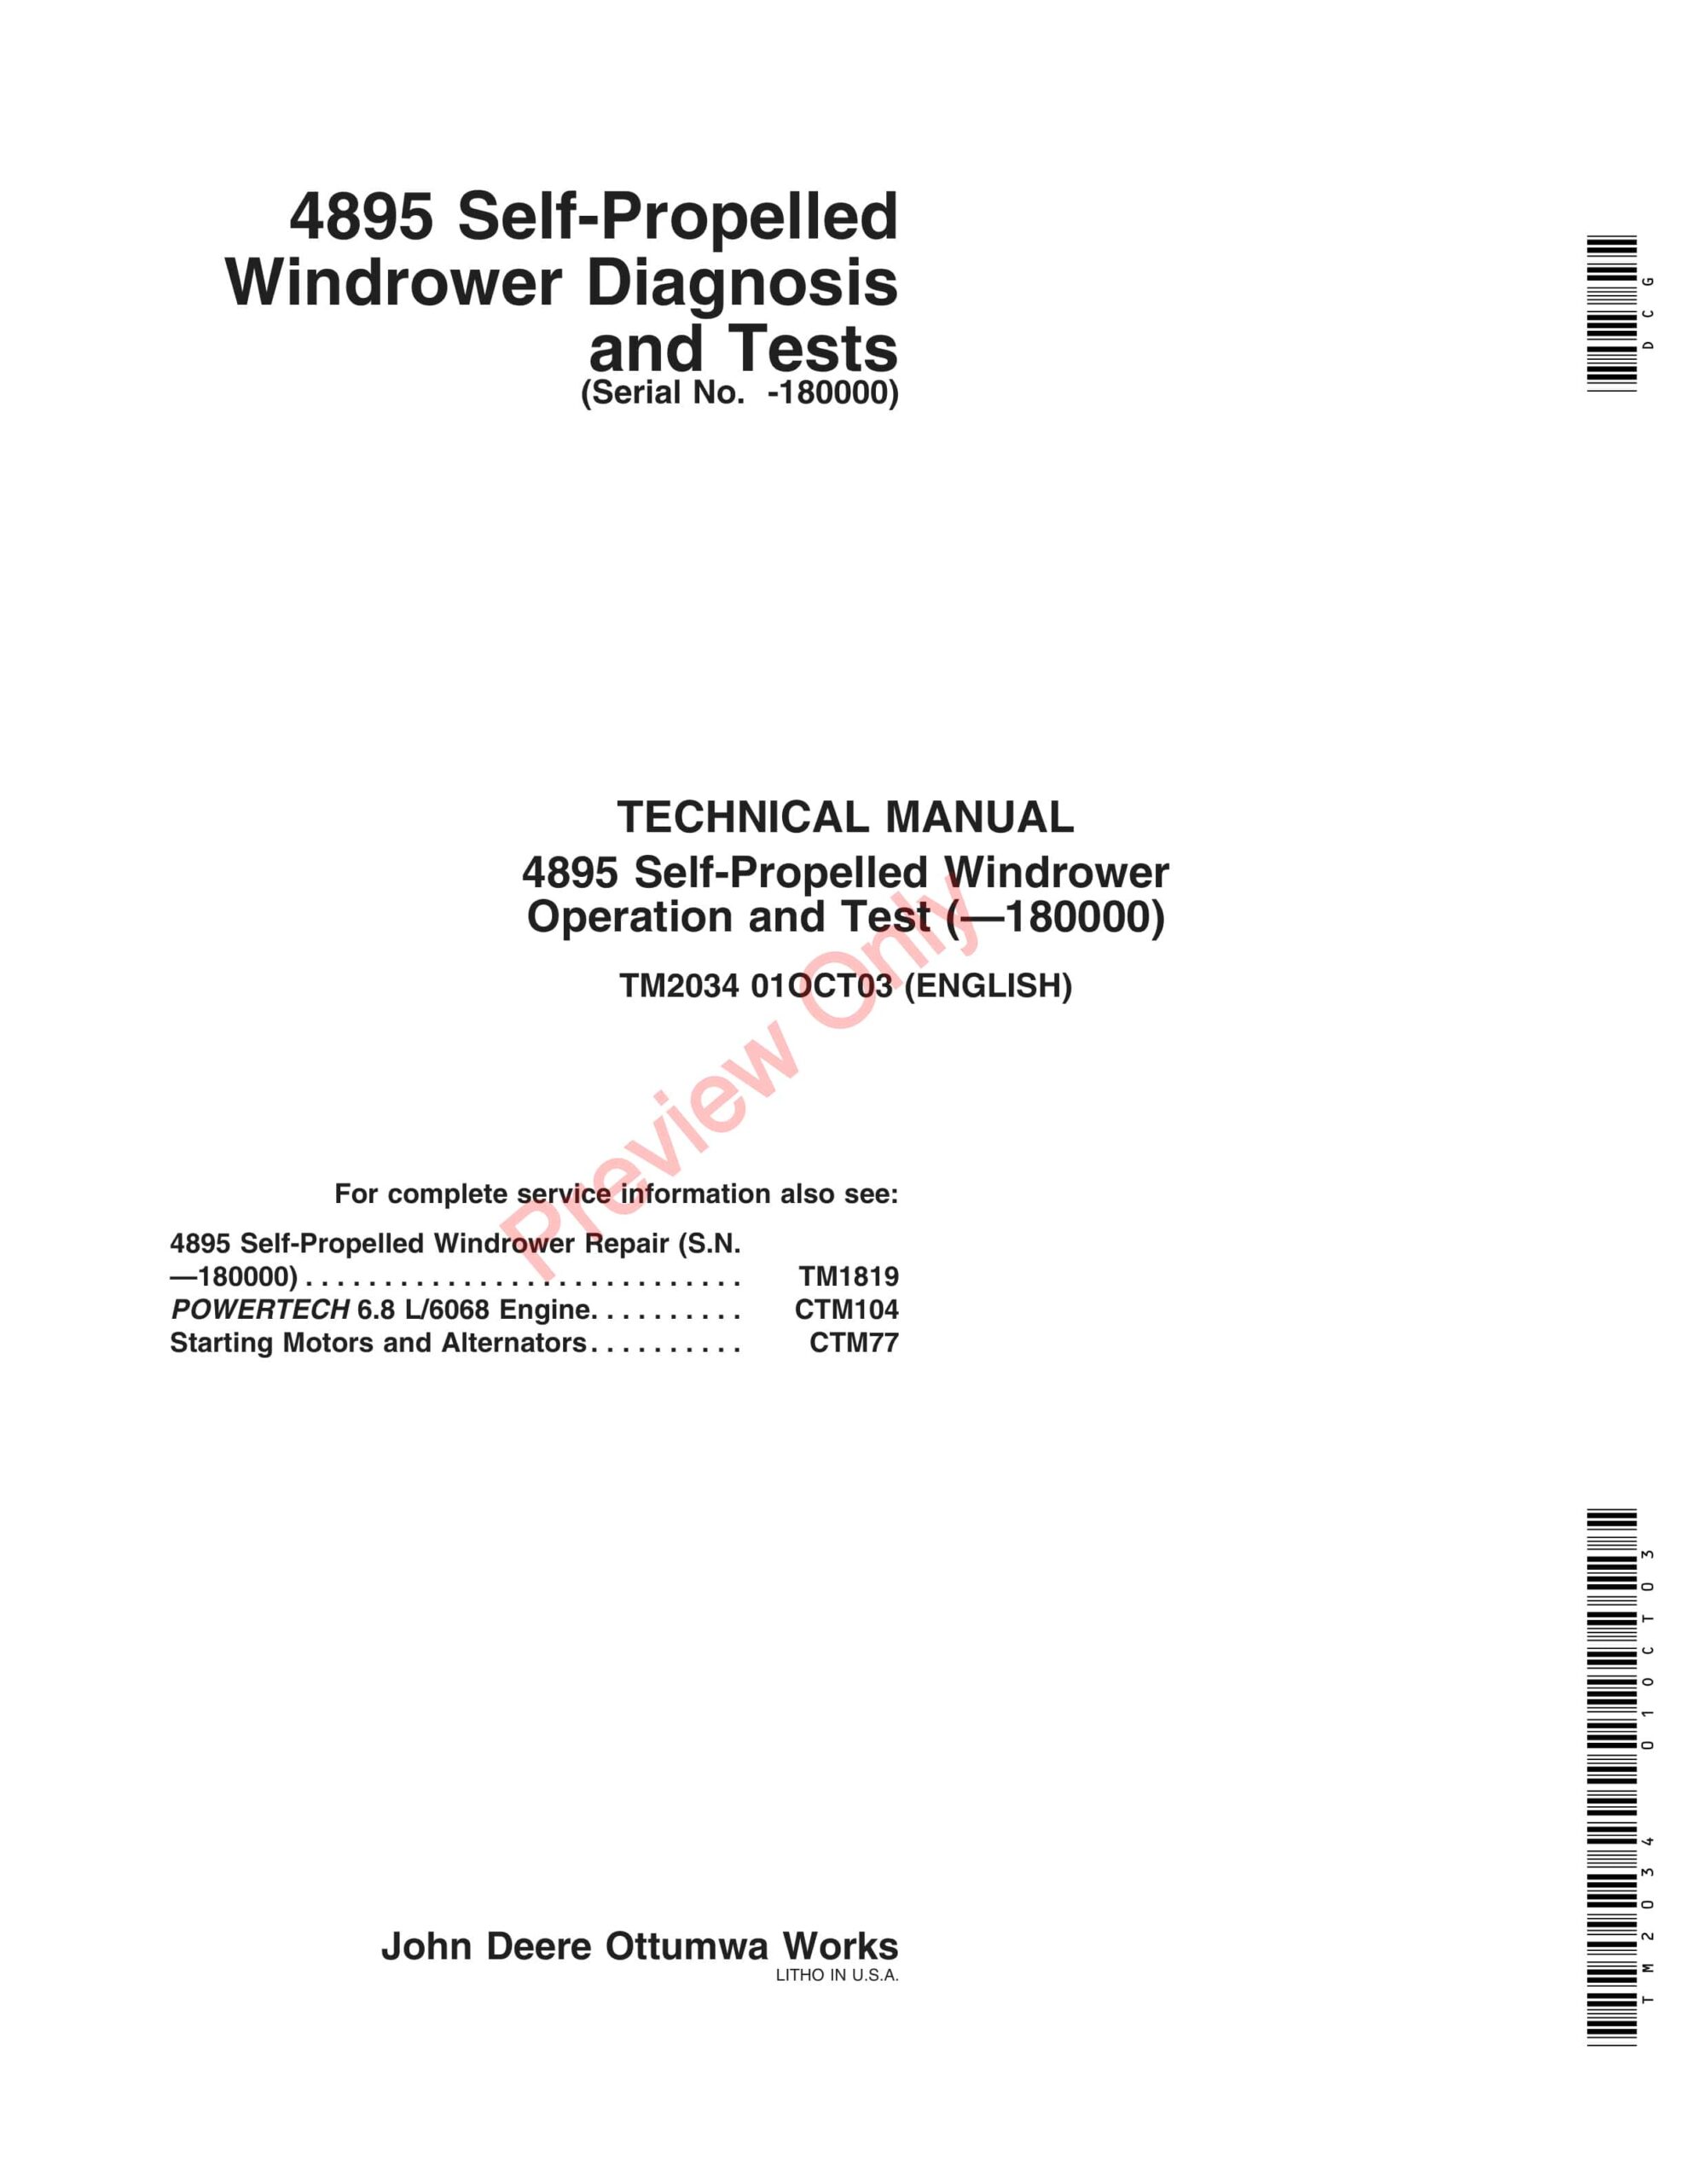 John Deere 4895 Self-Propelled Windrower Service Information TM2034 25JUL16-1